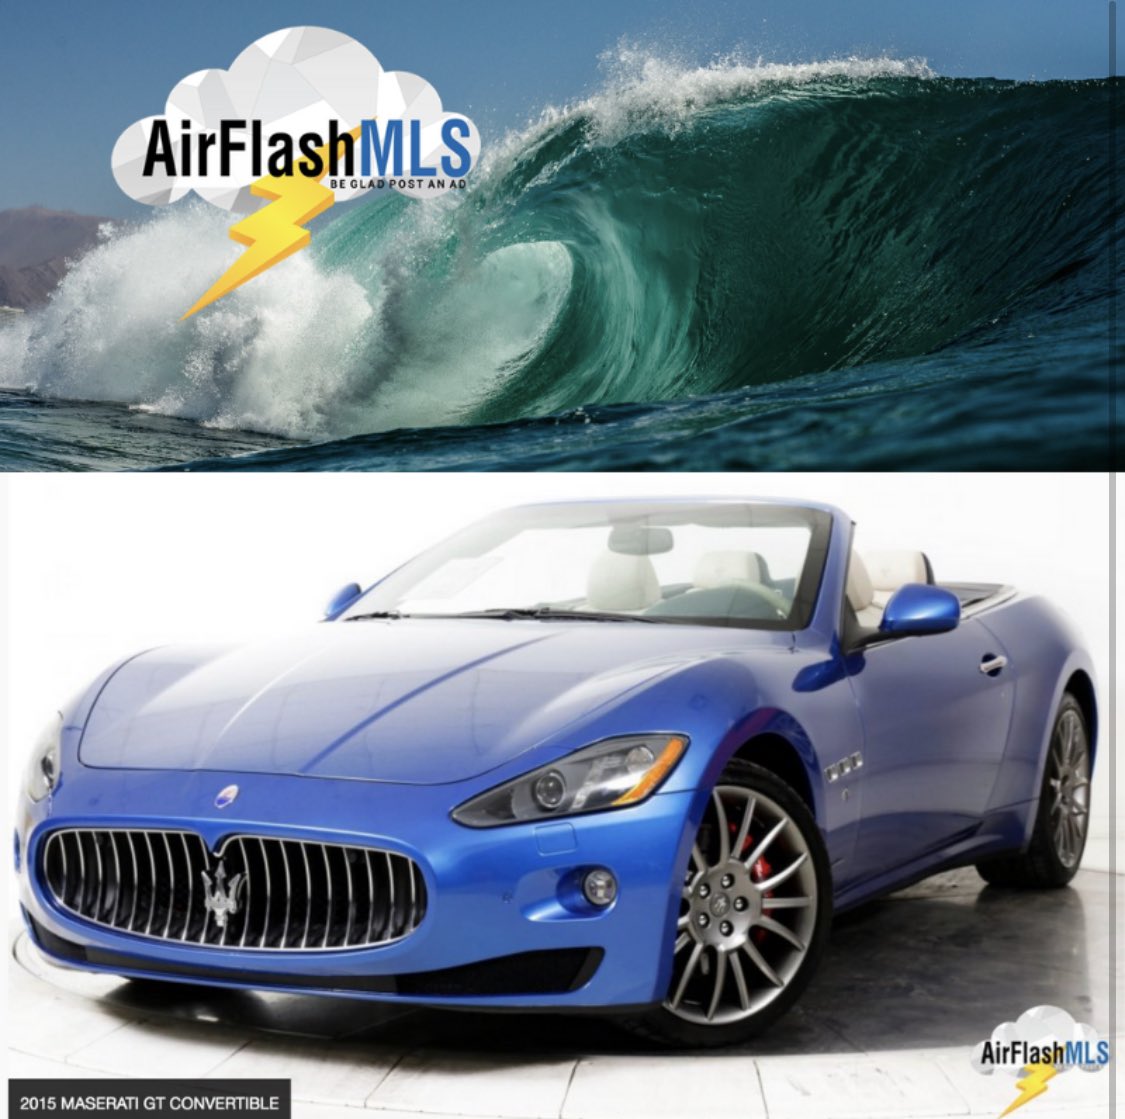 AirFlashMLS.com
bit.ly/2X6DdYN
Maserati of Long Is land
Is that a Royal, Electric or Ocean Blue?
#maseratigt #maserati #italiancars #fastcars #sportscars #luxurycars #maseratislovenija #maseratilevante #maseratighibli #loveforcars #carsofinstagram #cars #instada